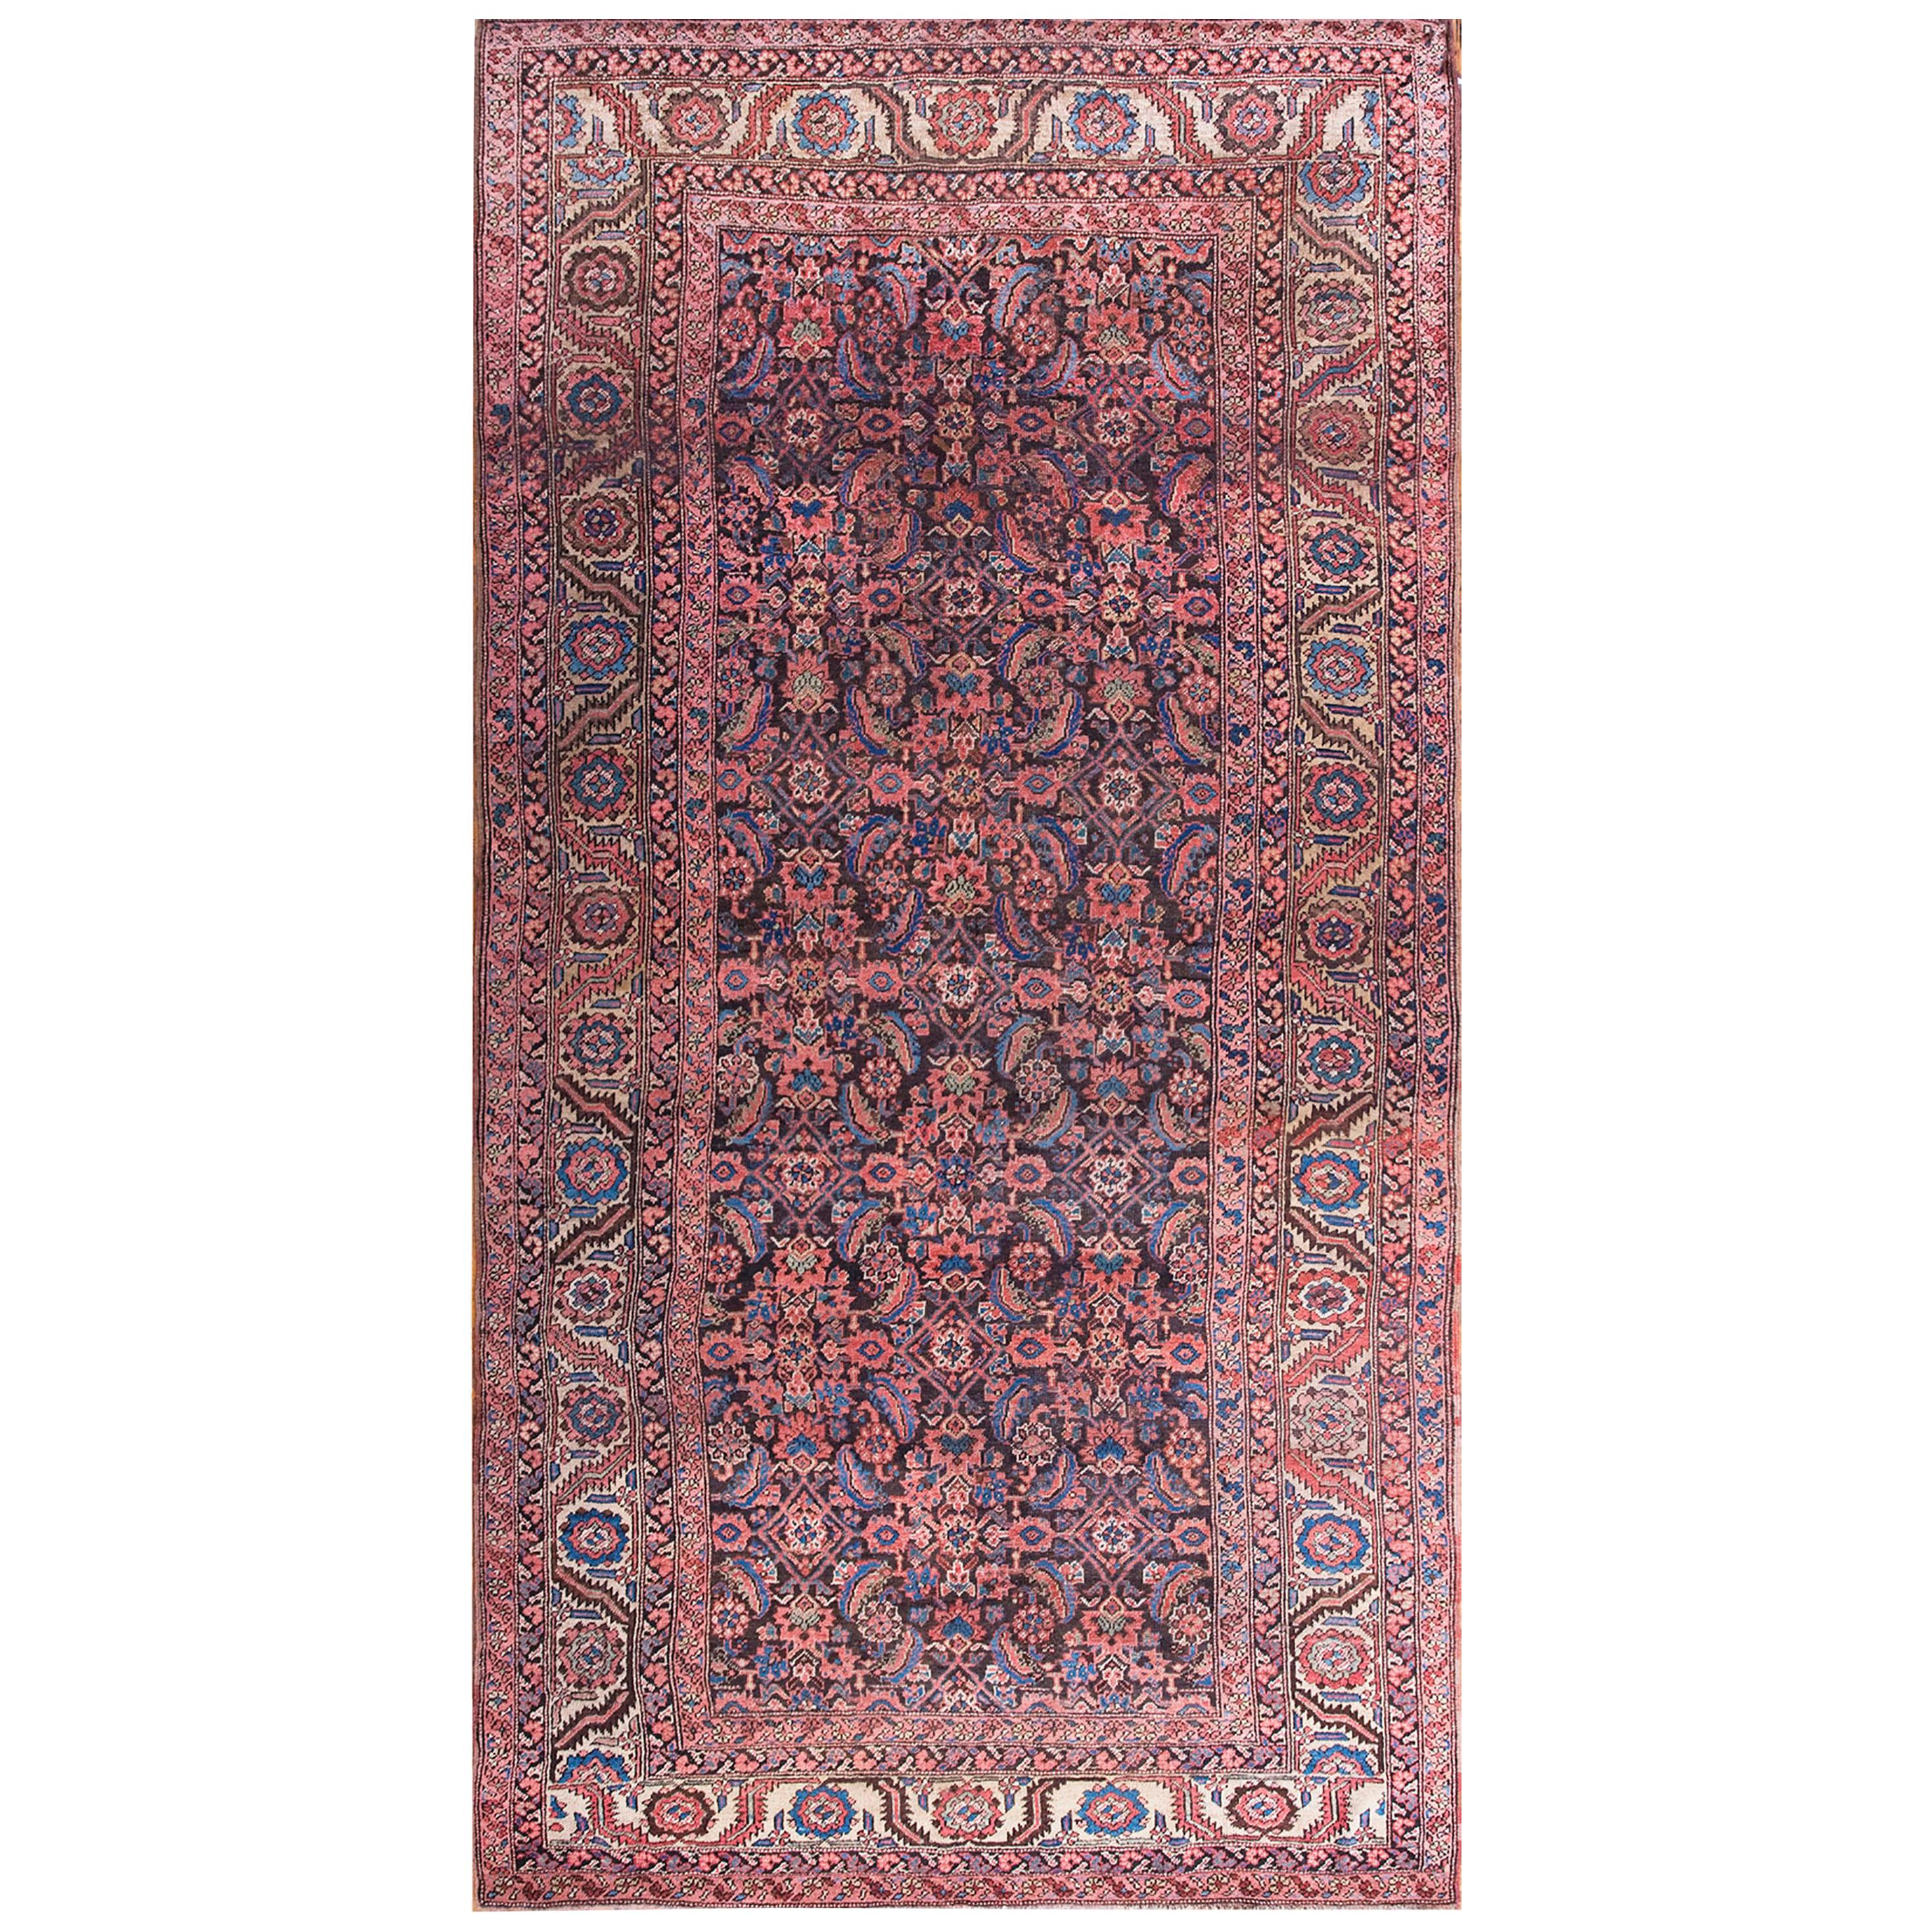 19th Century N.W. Persian Bakshaiesh Carpet ( 7'8" x 14'8" - 234 x 447 ) For Sale